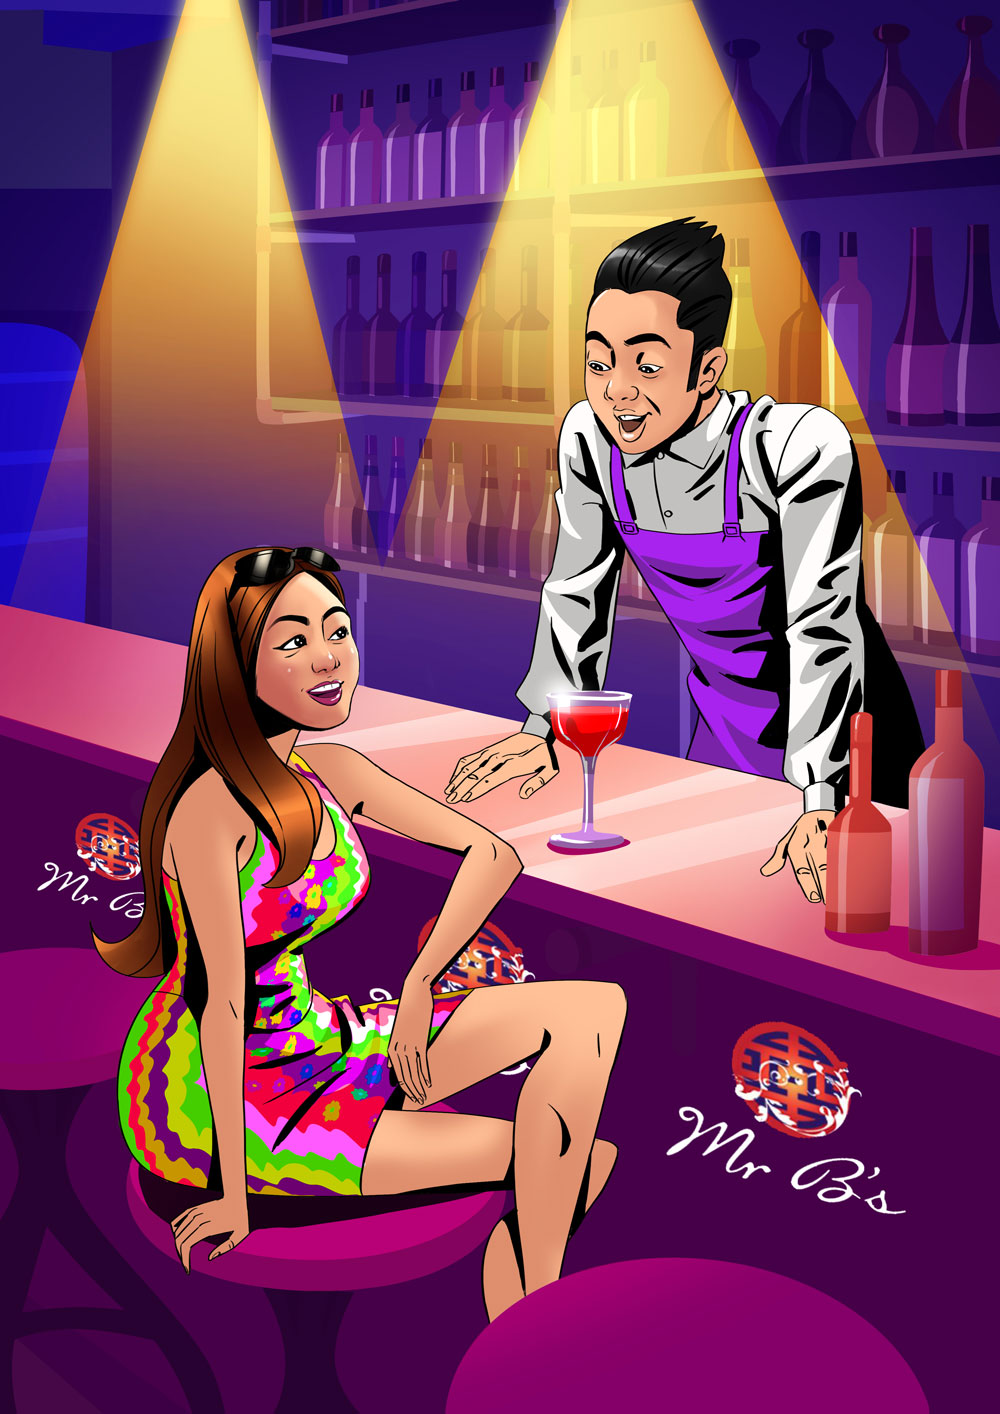 Bartender guy meets attractive girl in his bar - 2D illustration